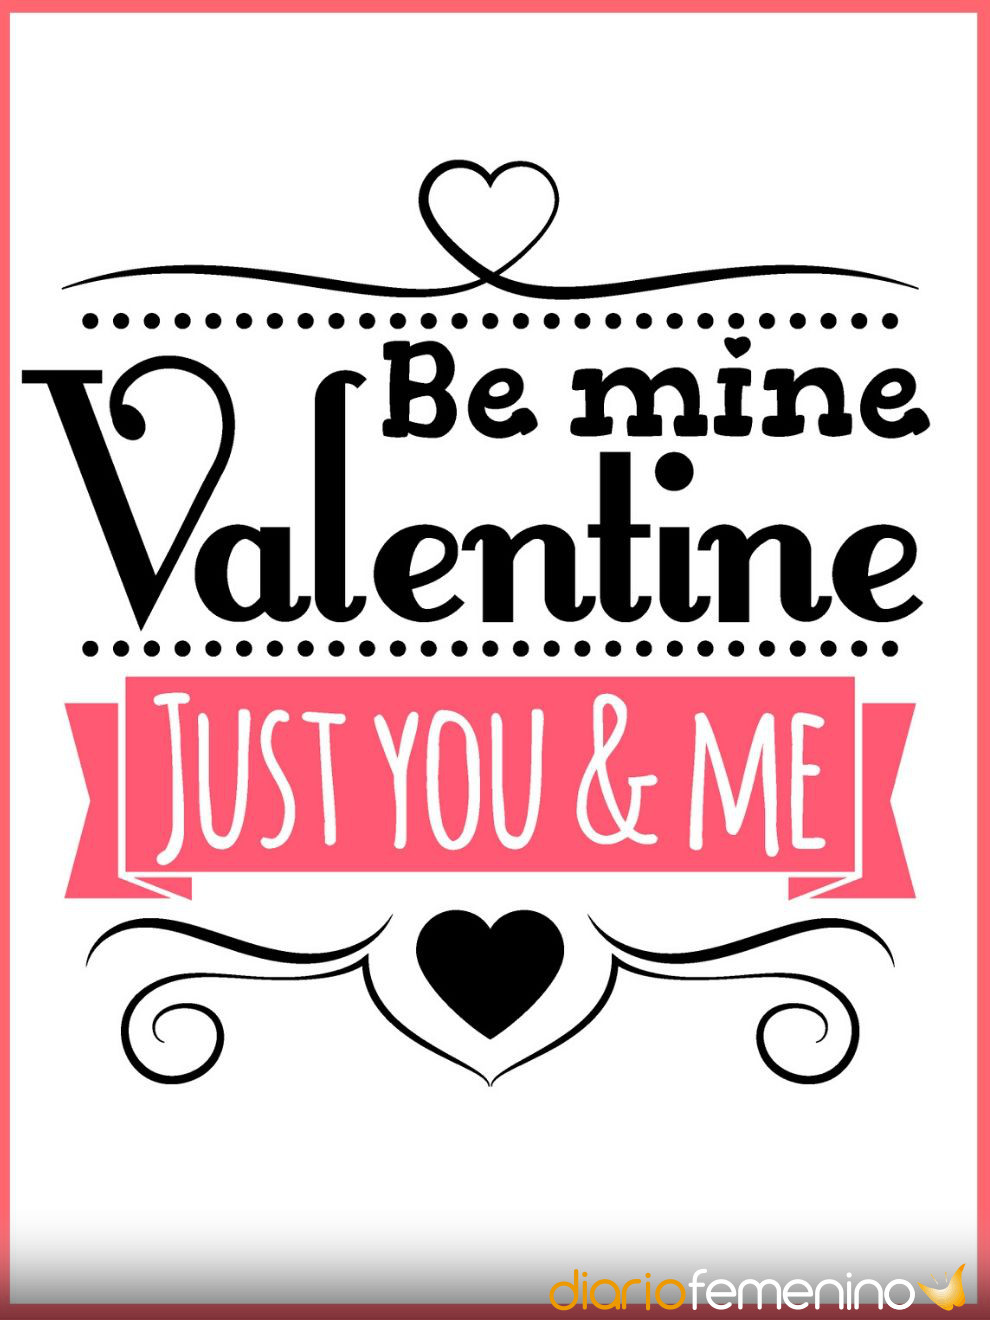 Tarjetas en inglés de San Valentín: 'I love you' el 14 de febrero